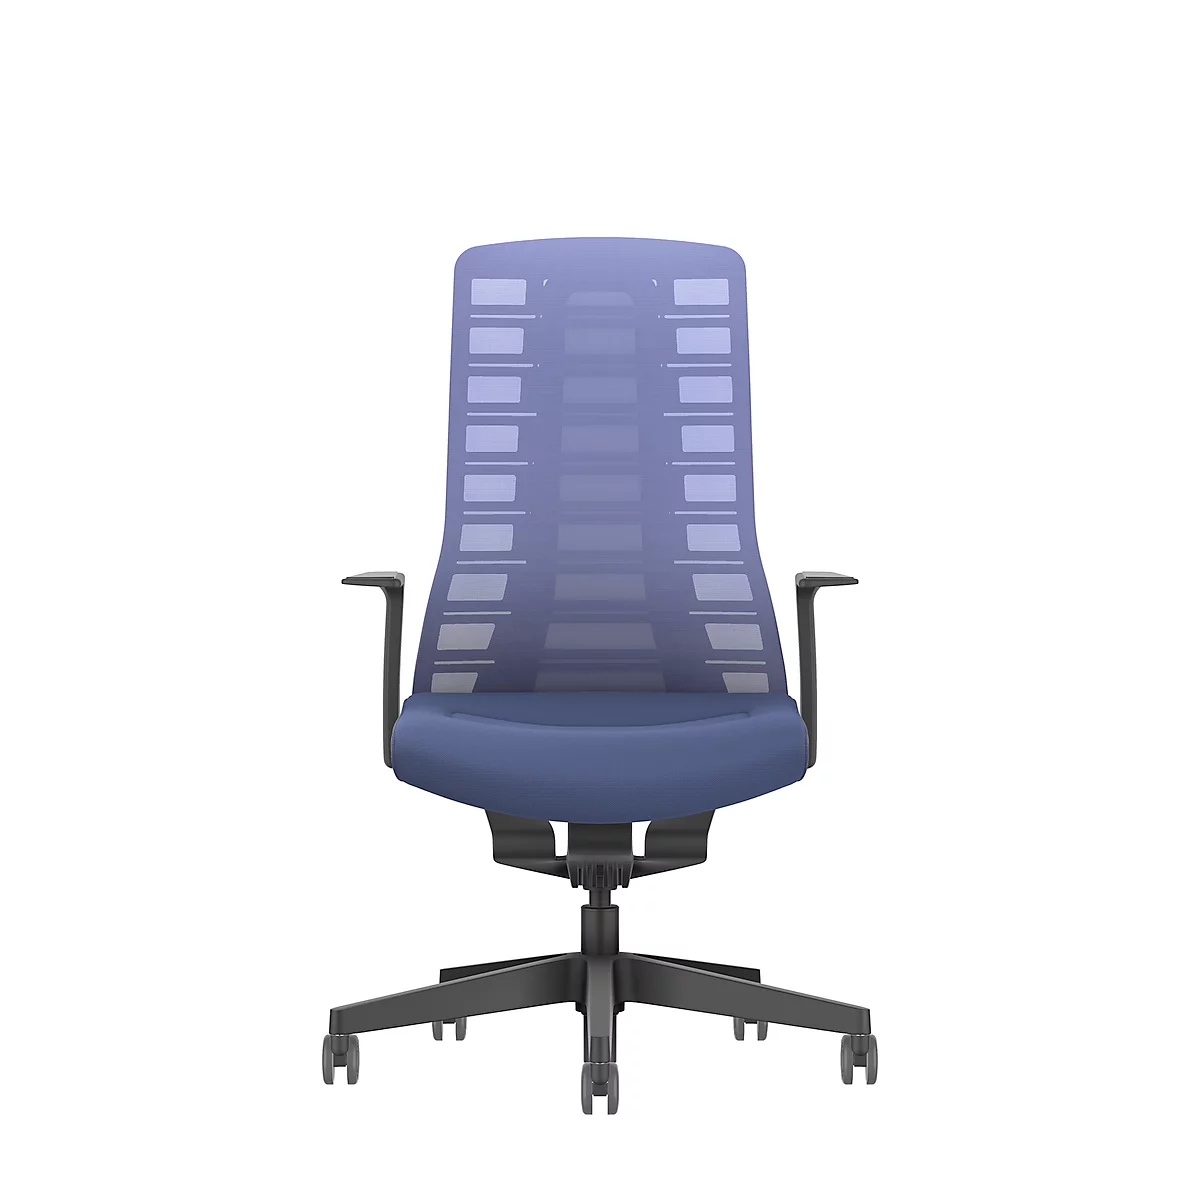 Interstuhl bureaustoel PUREis3, vaste armleuningen, 3D auto-synchroonmechanisme, kuipzitting, gazen rugleuning, kobaltblauw/zwart